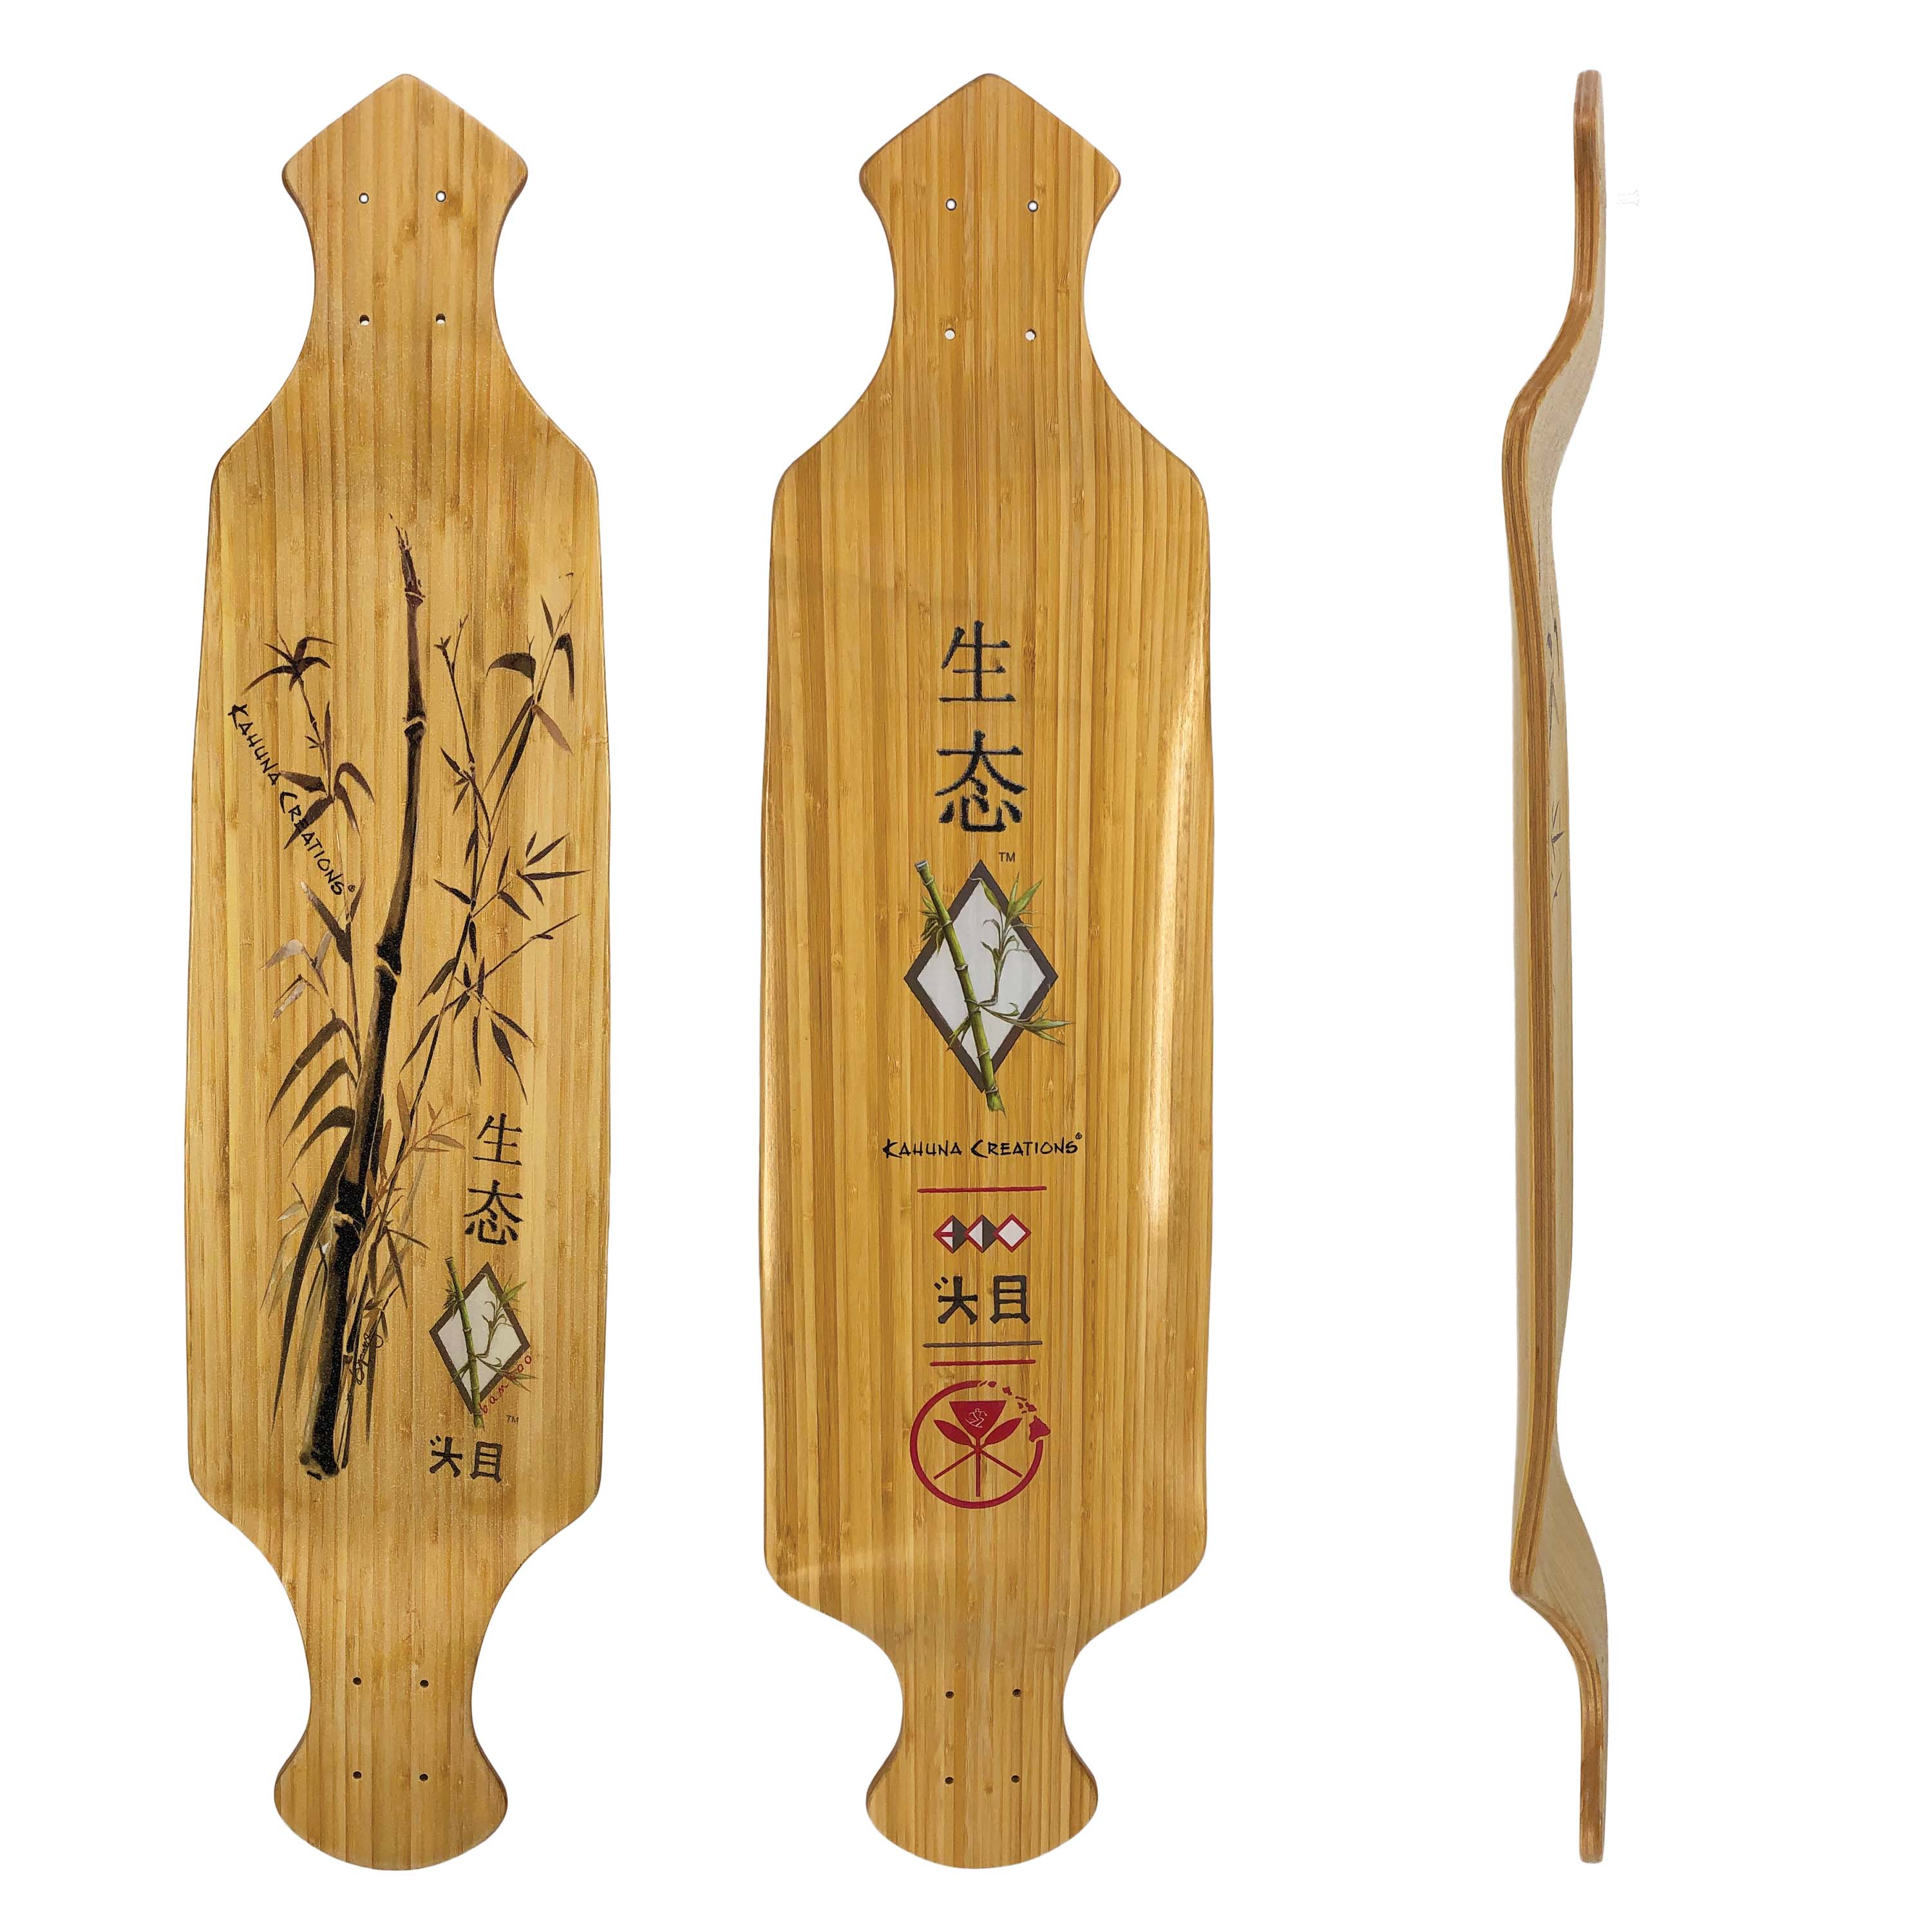 Kahuna Creations Bamboo Drop Deck 42" Longboard